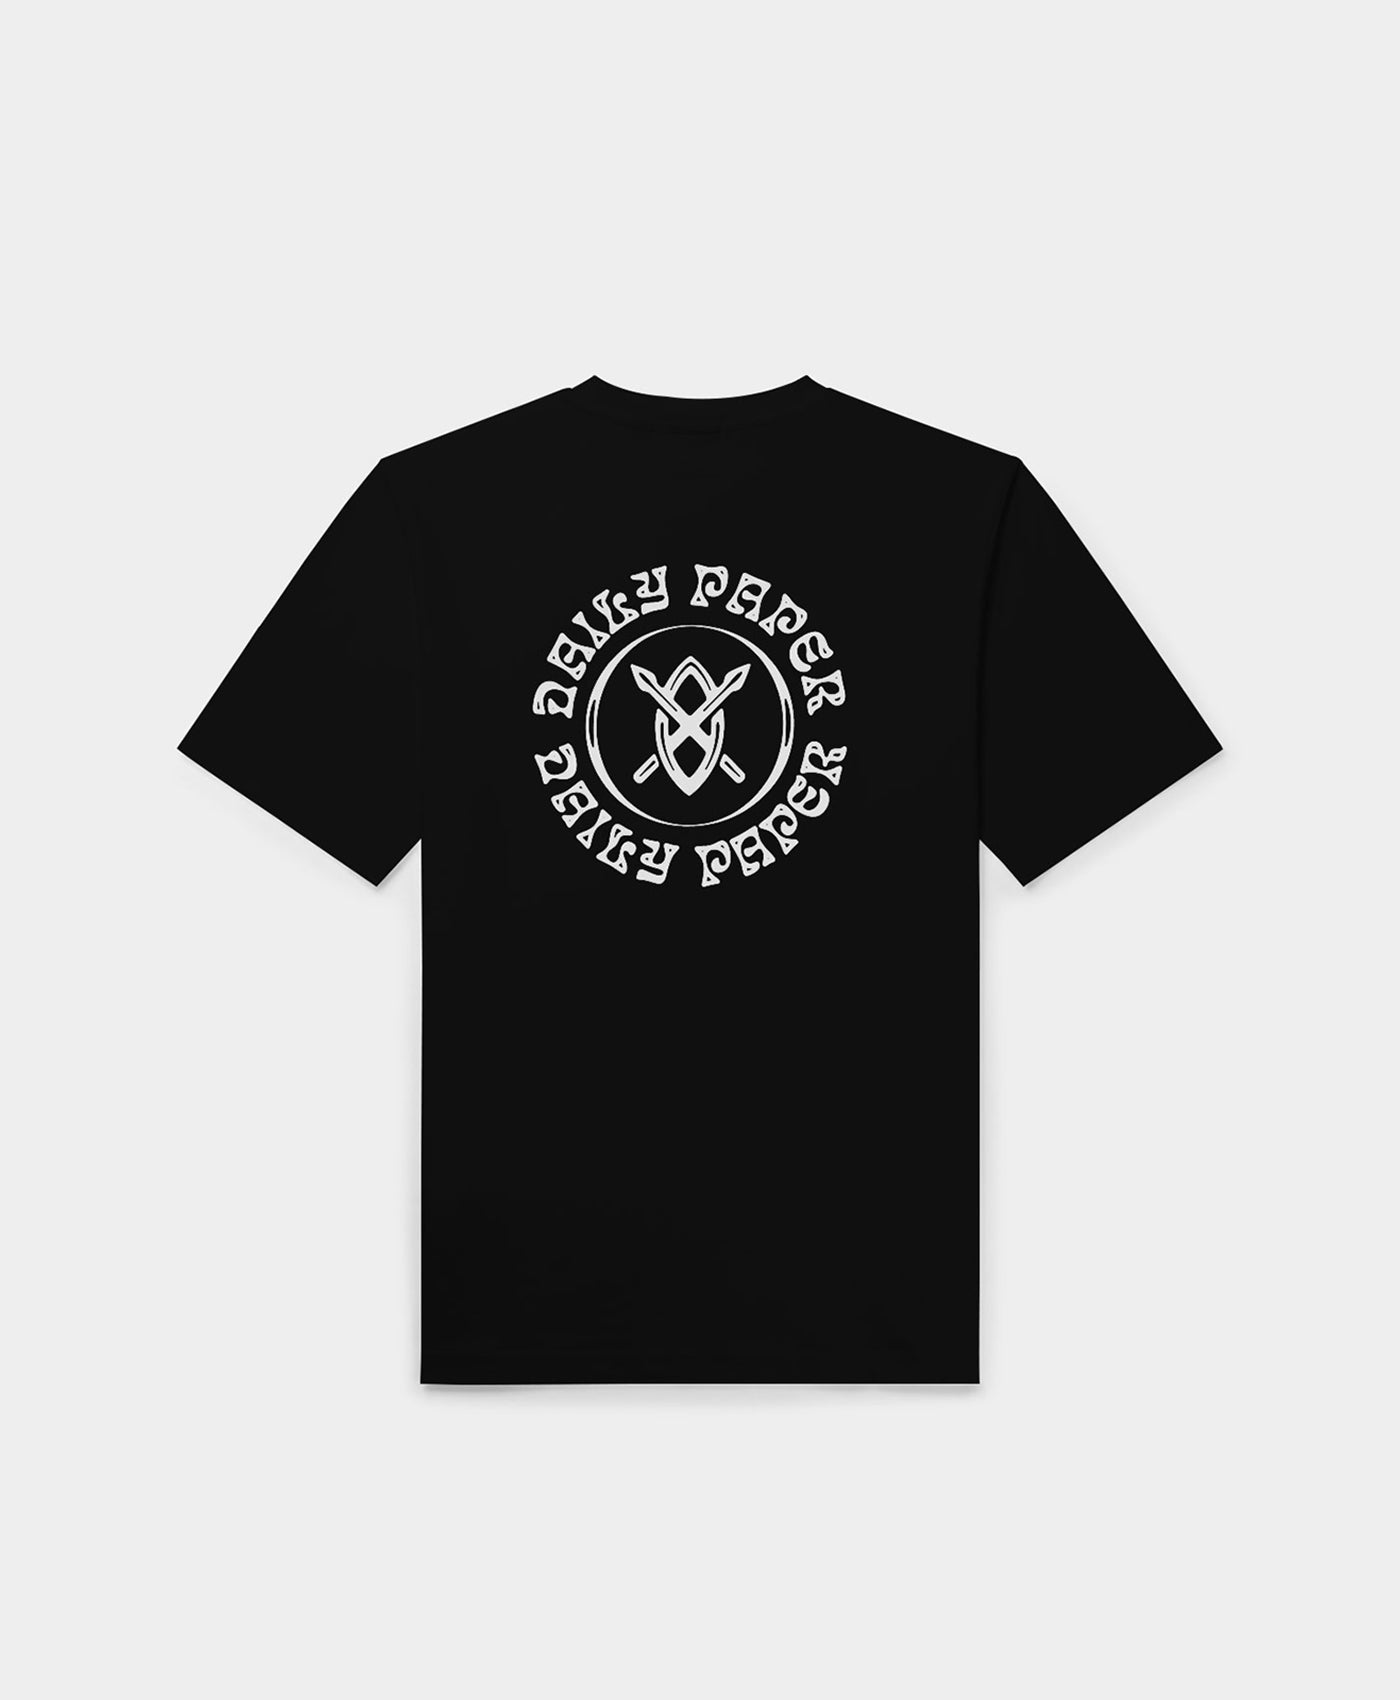 DP - Black Parnian T-Shirt - Packshot - Front